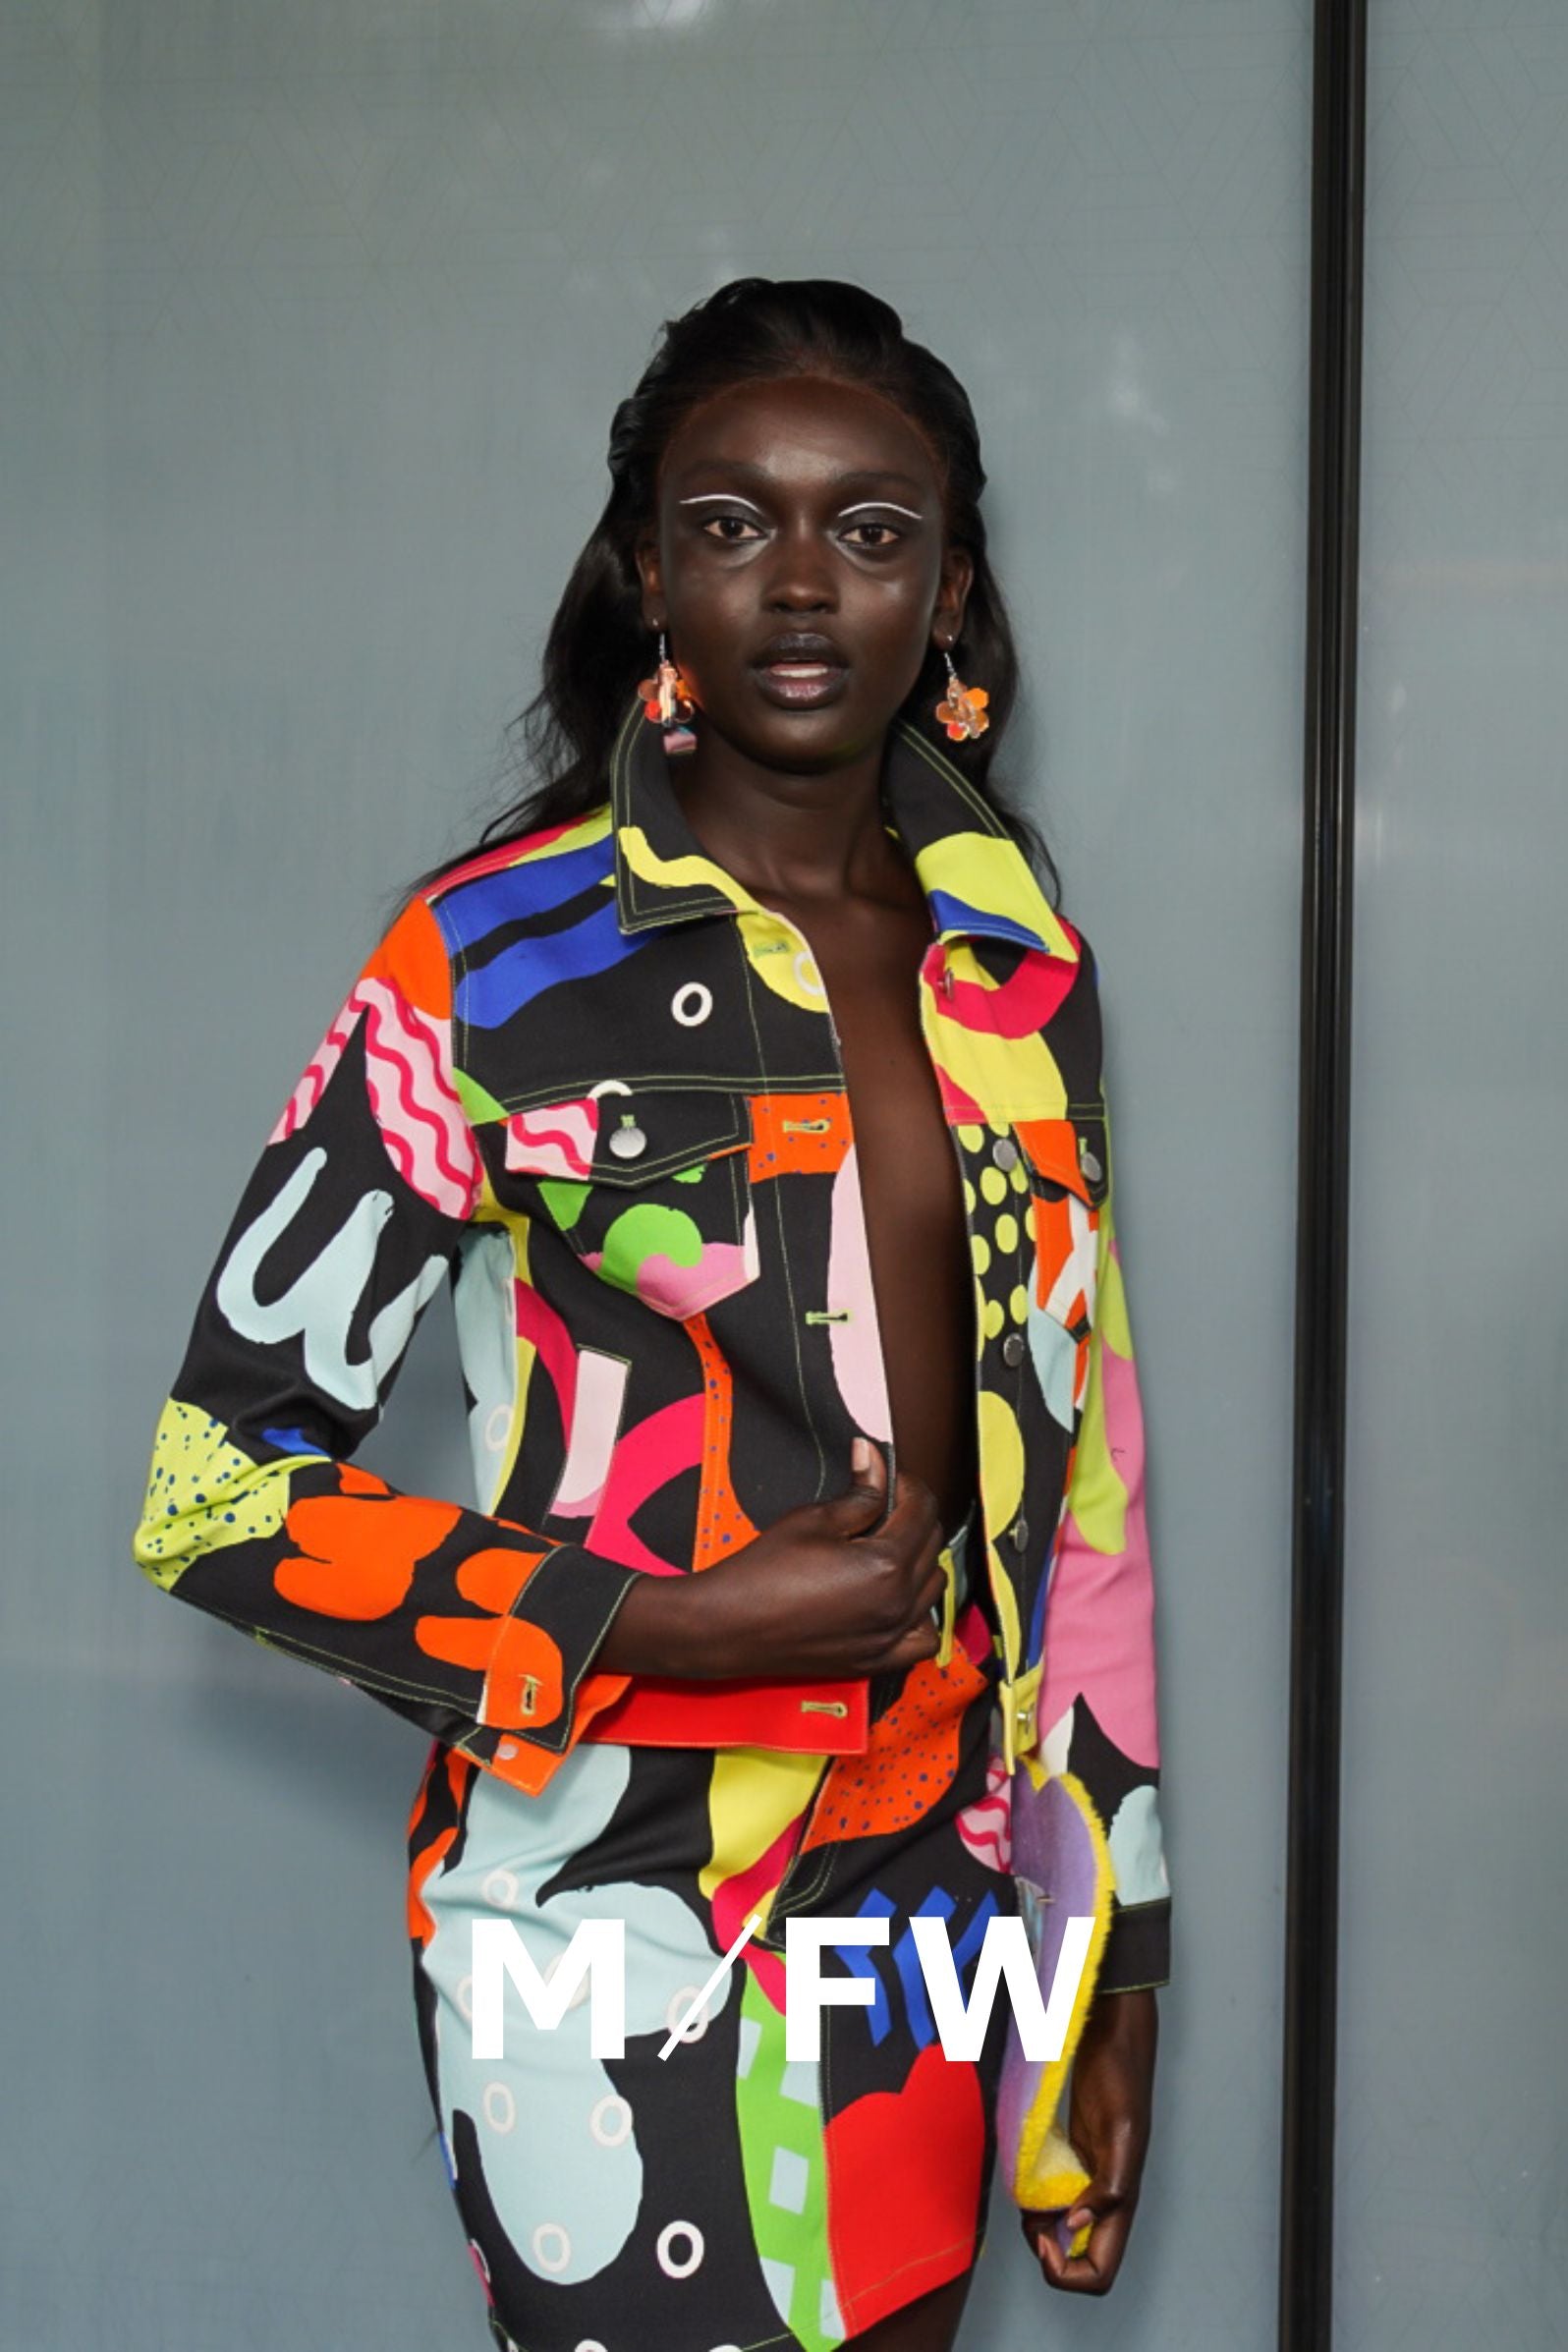 playground jacket was featured in Melbourne fashion week